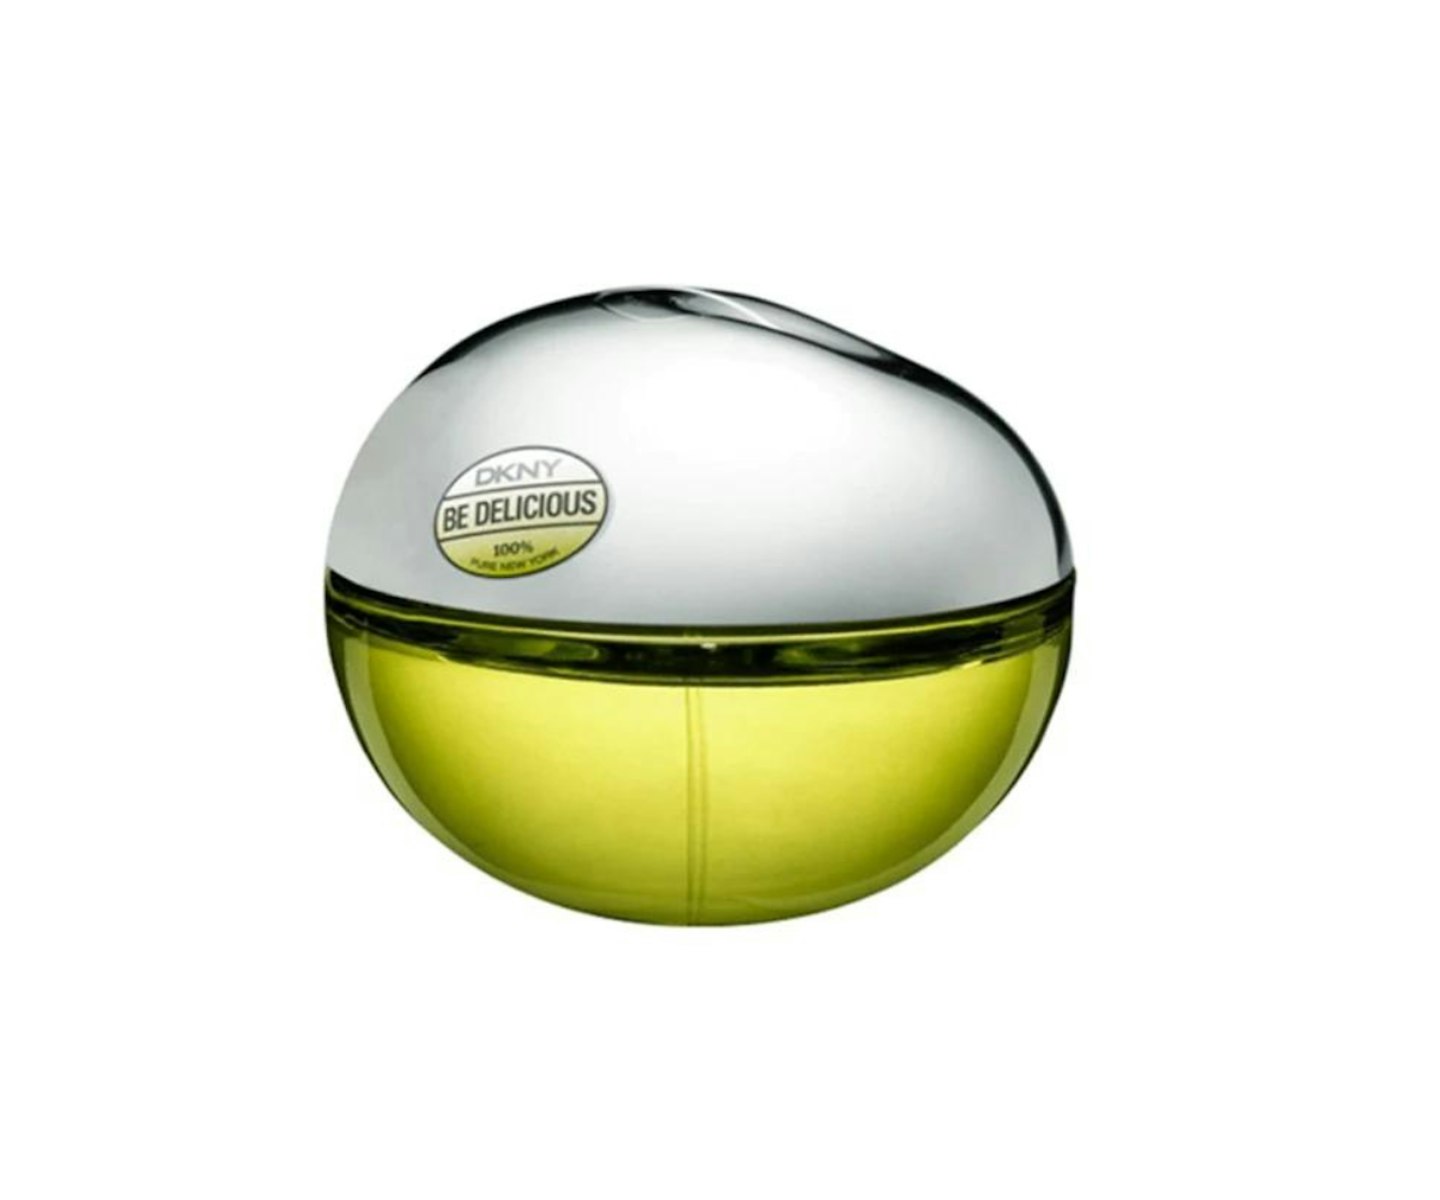 DKNY Be Delicious Eau De Parfum Women's Perfume Spray 100ml